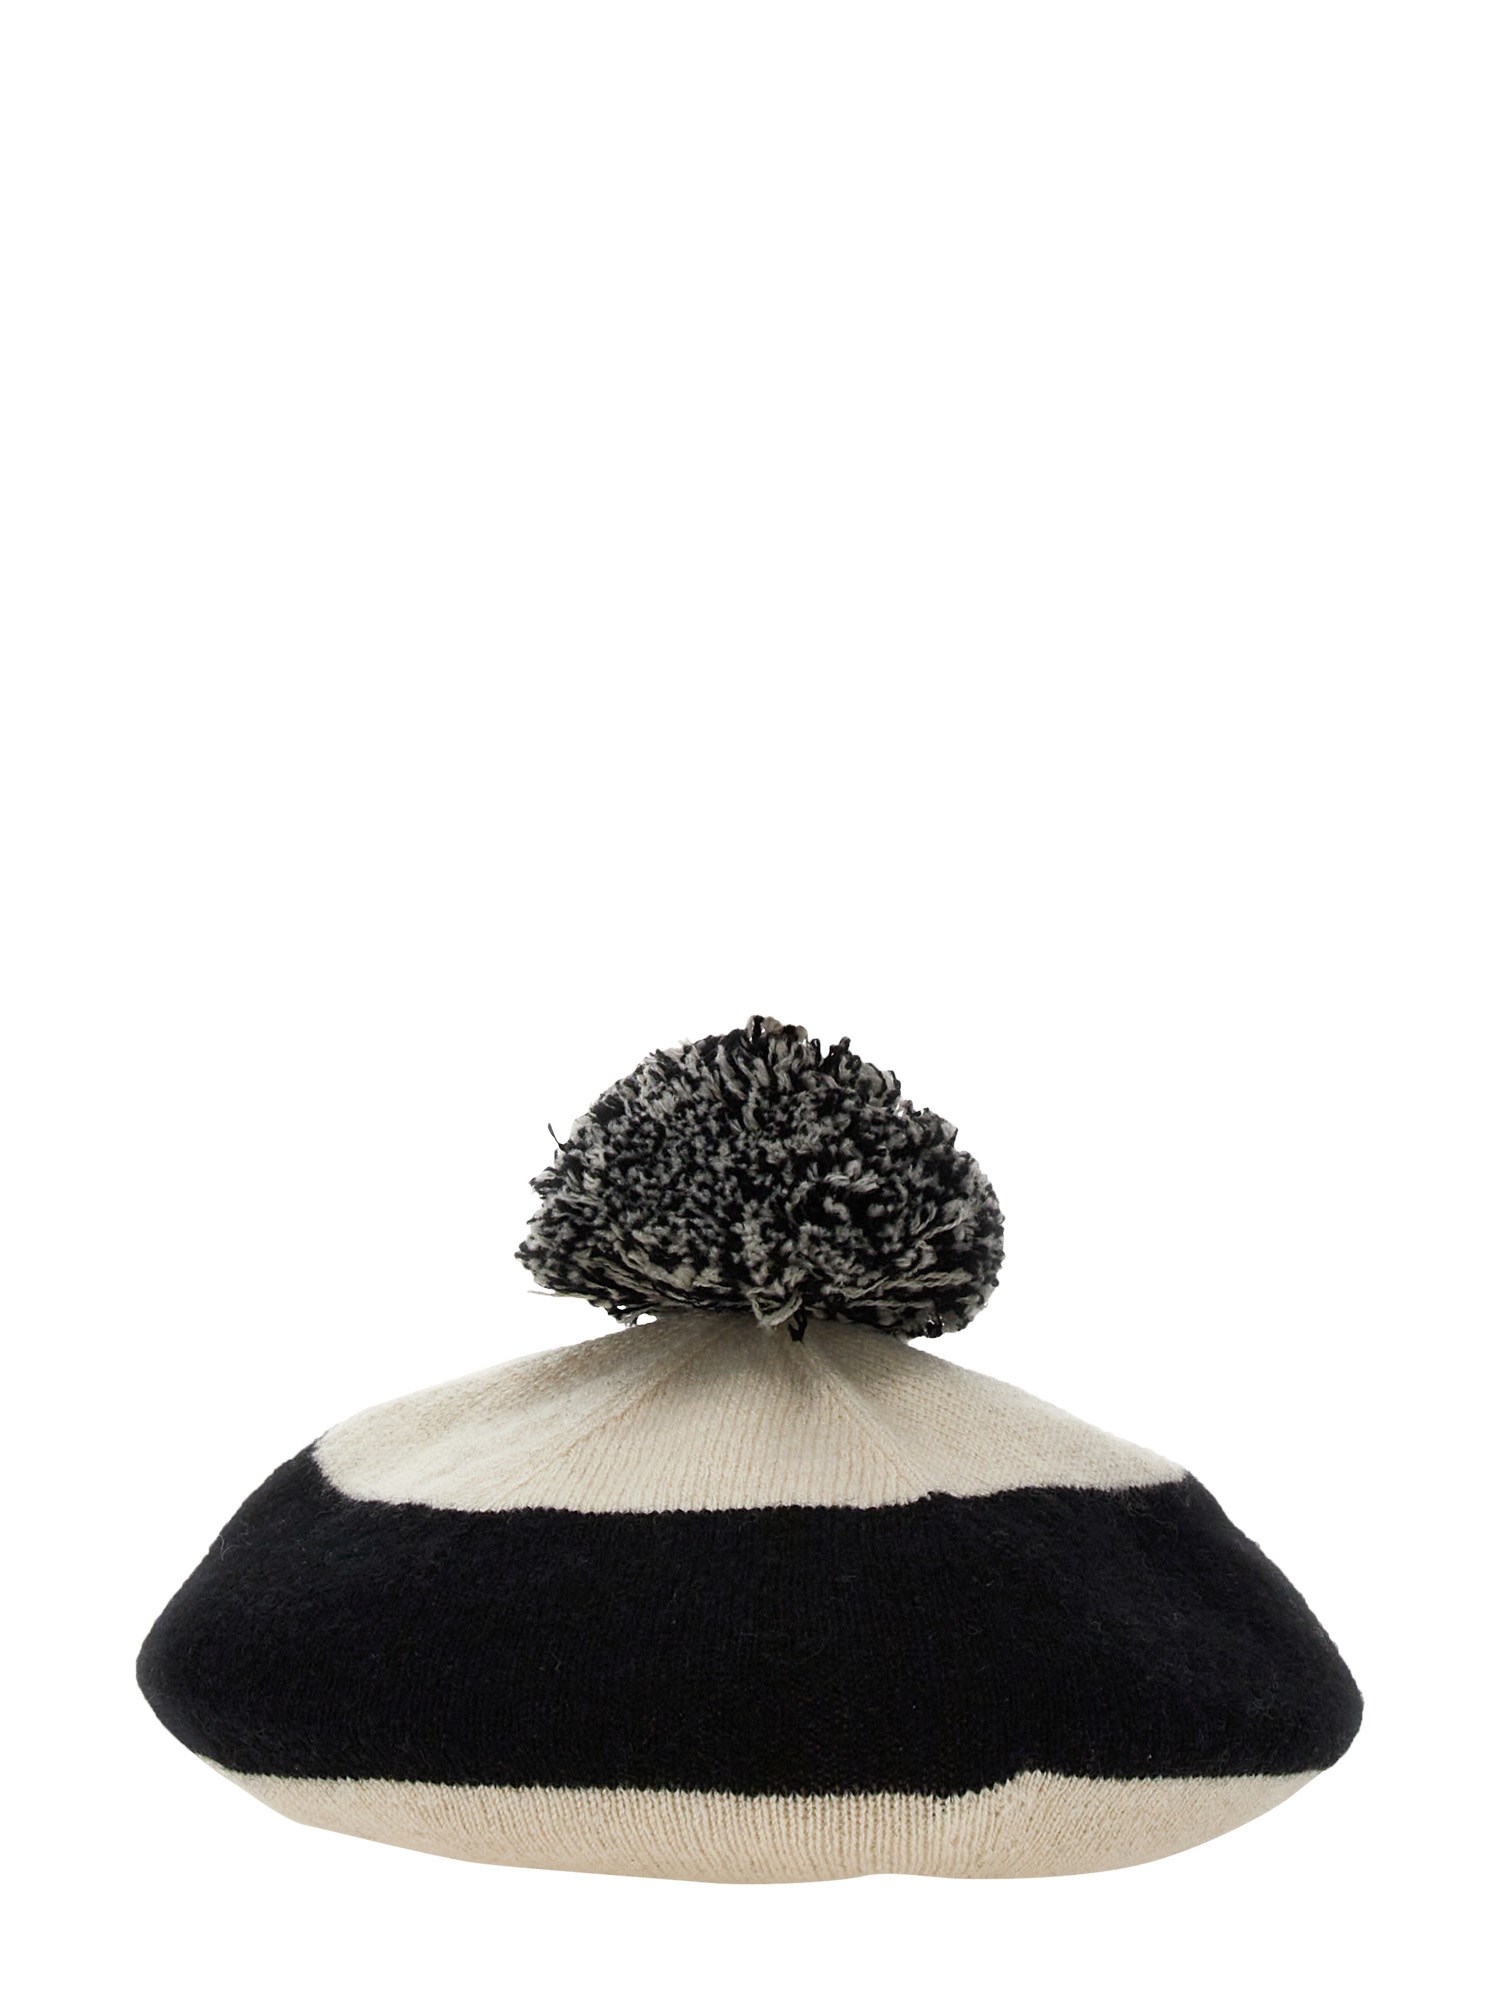 Margaret Howell Hat With Pom Pom In Black